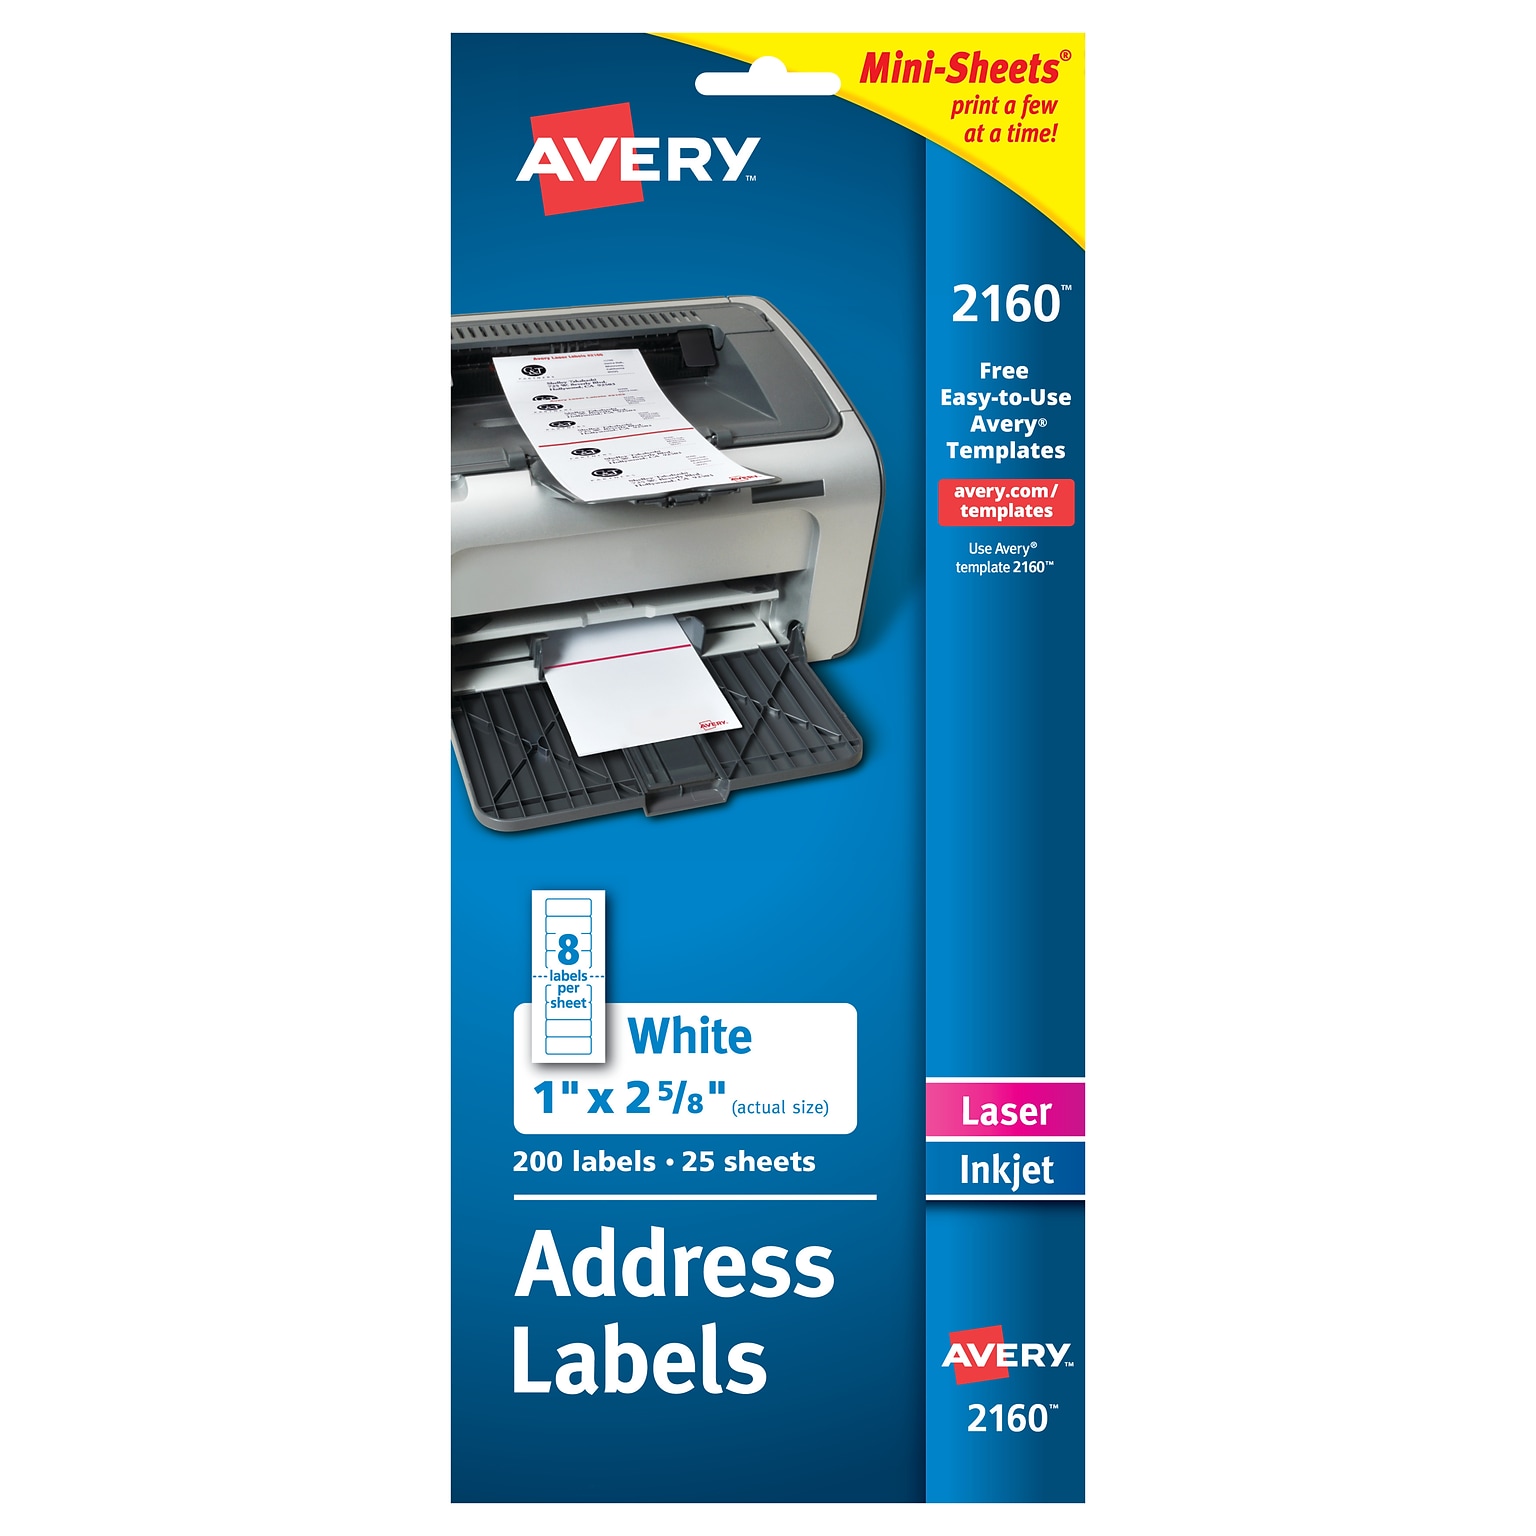 Avery Mini-Sheets Laser/Inkjet Address Labels, 1 x 2-5/8, White, 8 Labels/Sheet, 25 Sheets/Pack (2160)